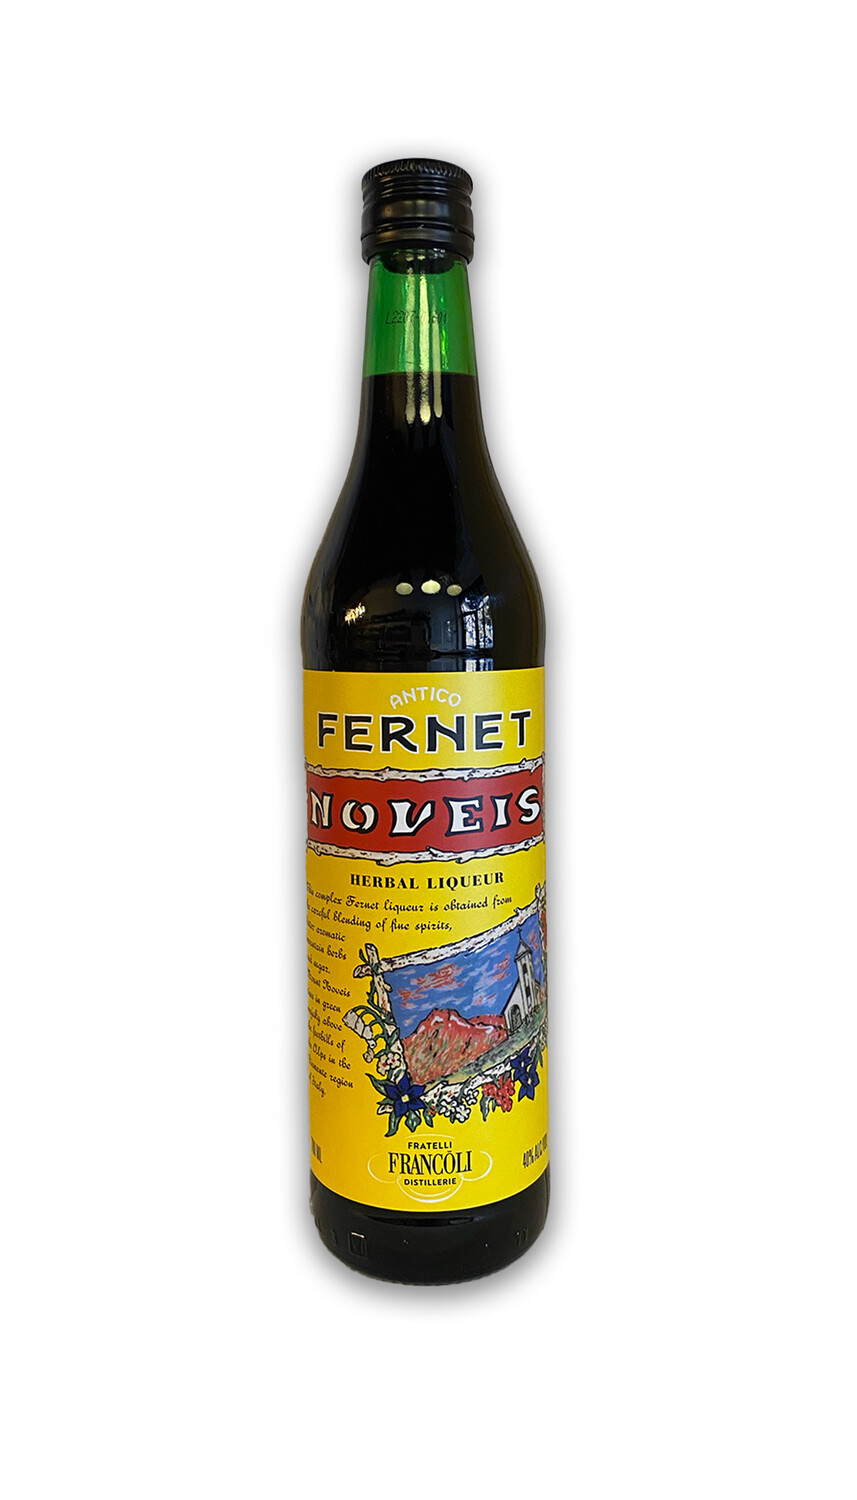 Fernet Noveis Herbal Liqueur